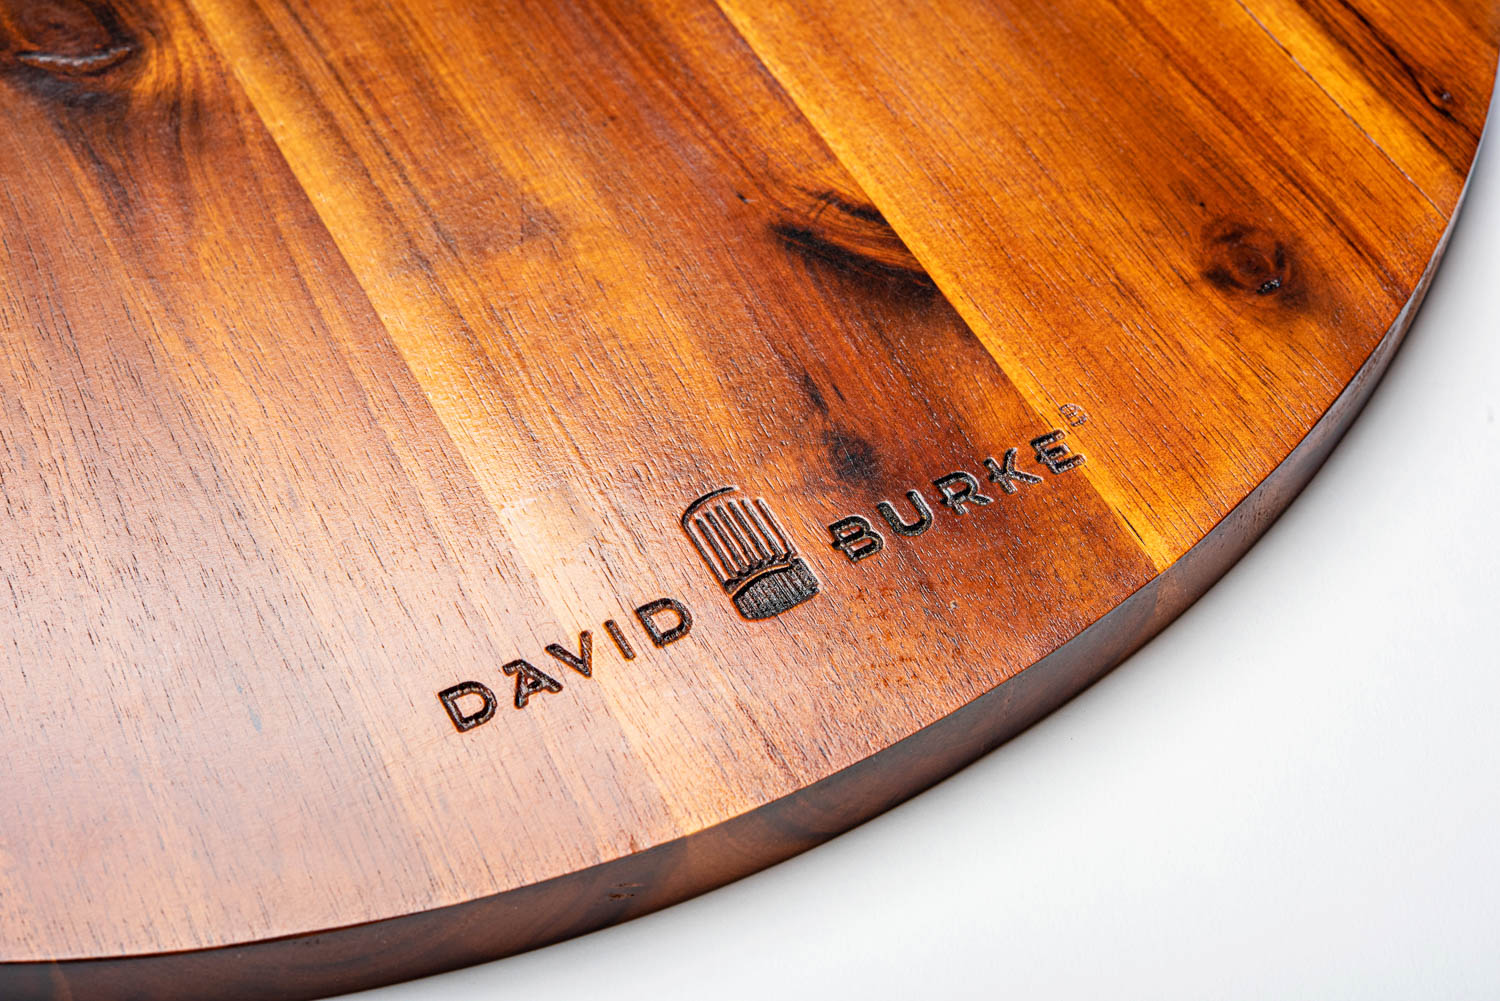 David Burke Acacia Extra Large Round Cutting Board – Chef's Kiss At Home